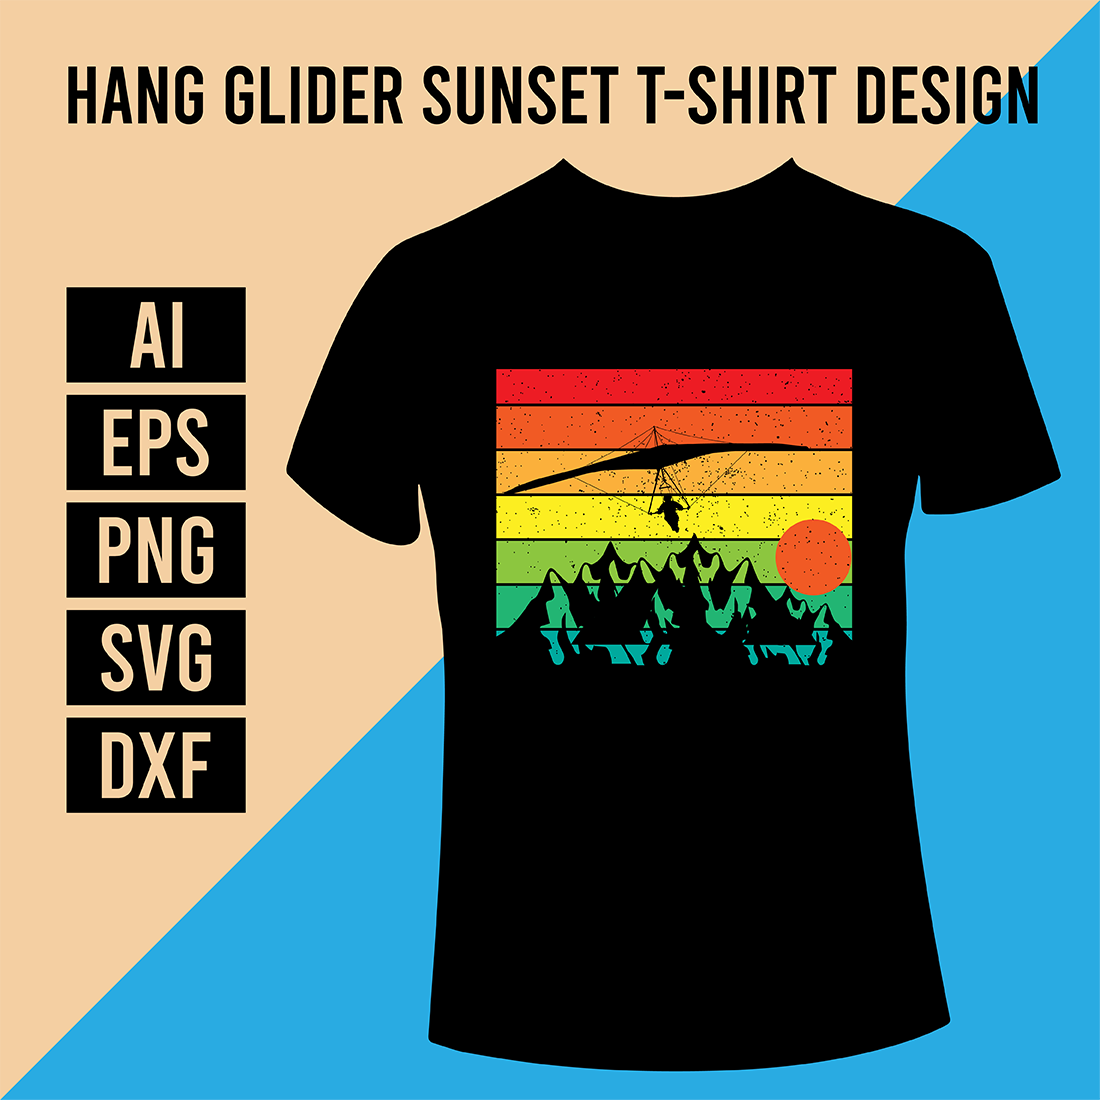 Hang Glider Sunset T-Shirt Design cover image.